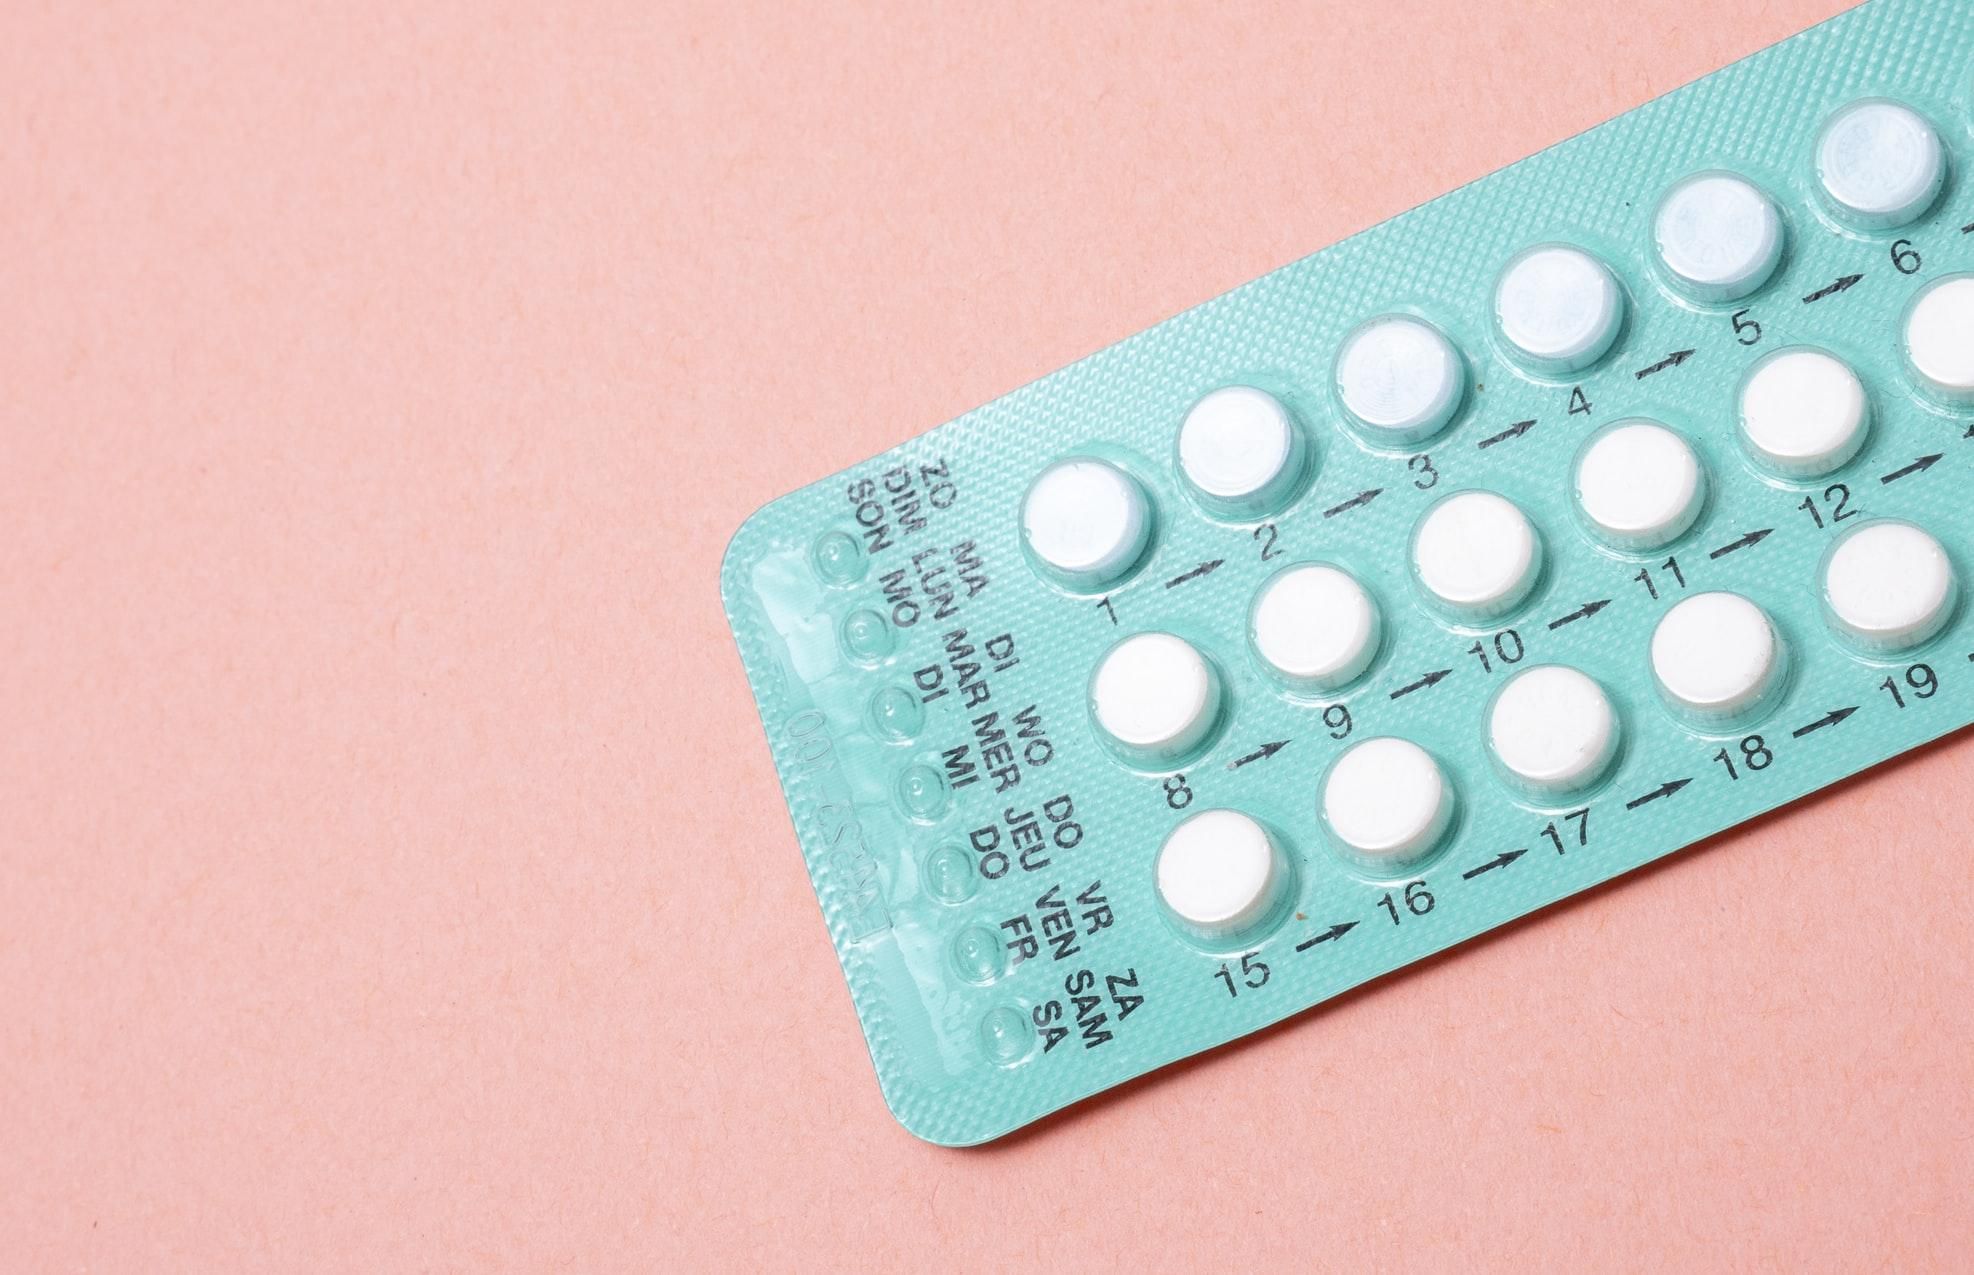 Оральные контрацептивы могут влиять на размер гипоталамуса